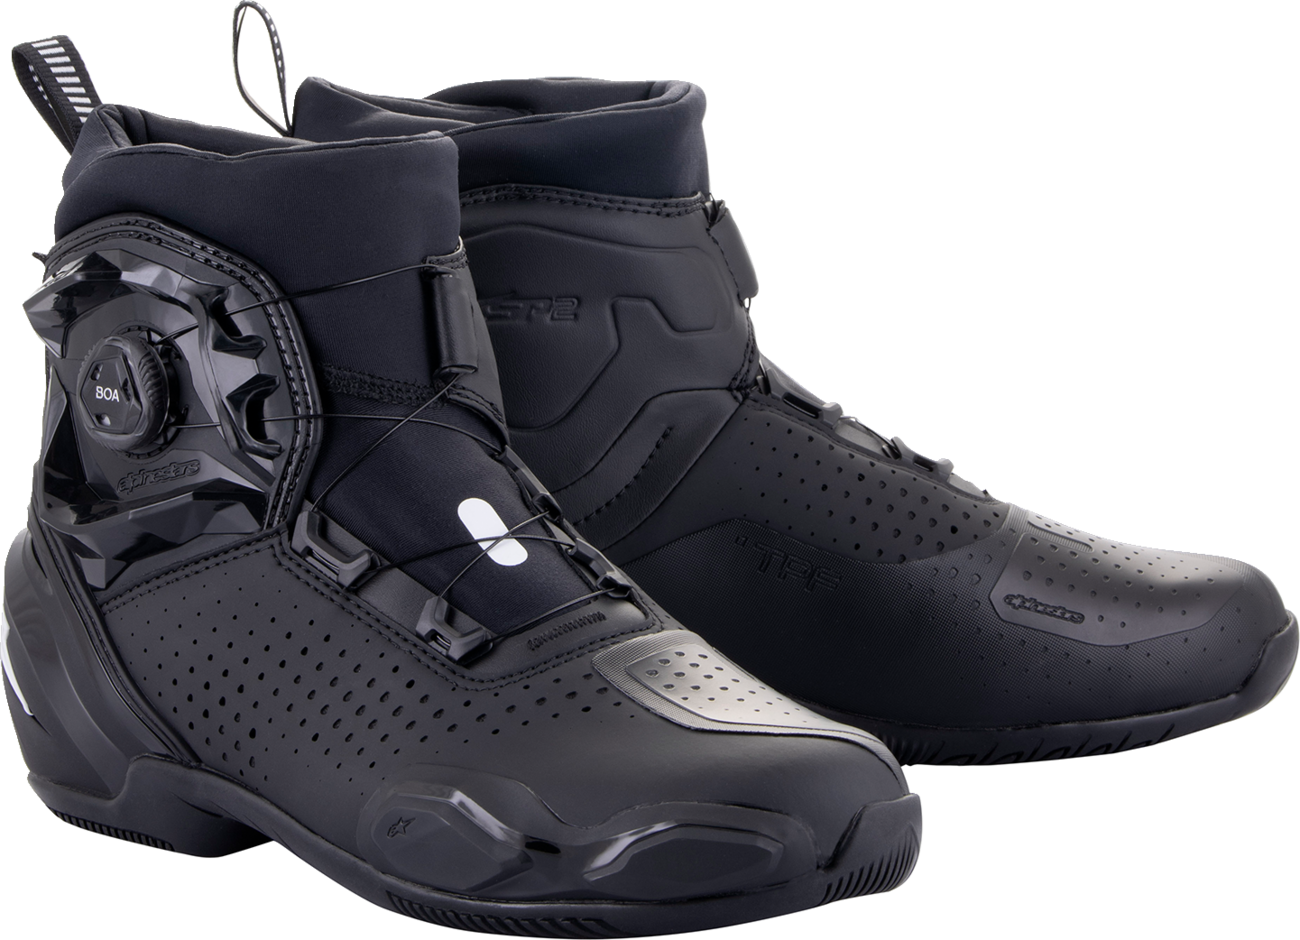 ALPINESTARS SP-2 Shoes - Black - US 9 / EU 43 2511622-10-43